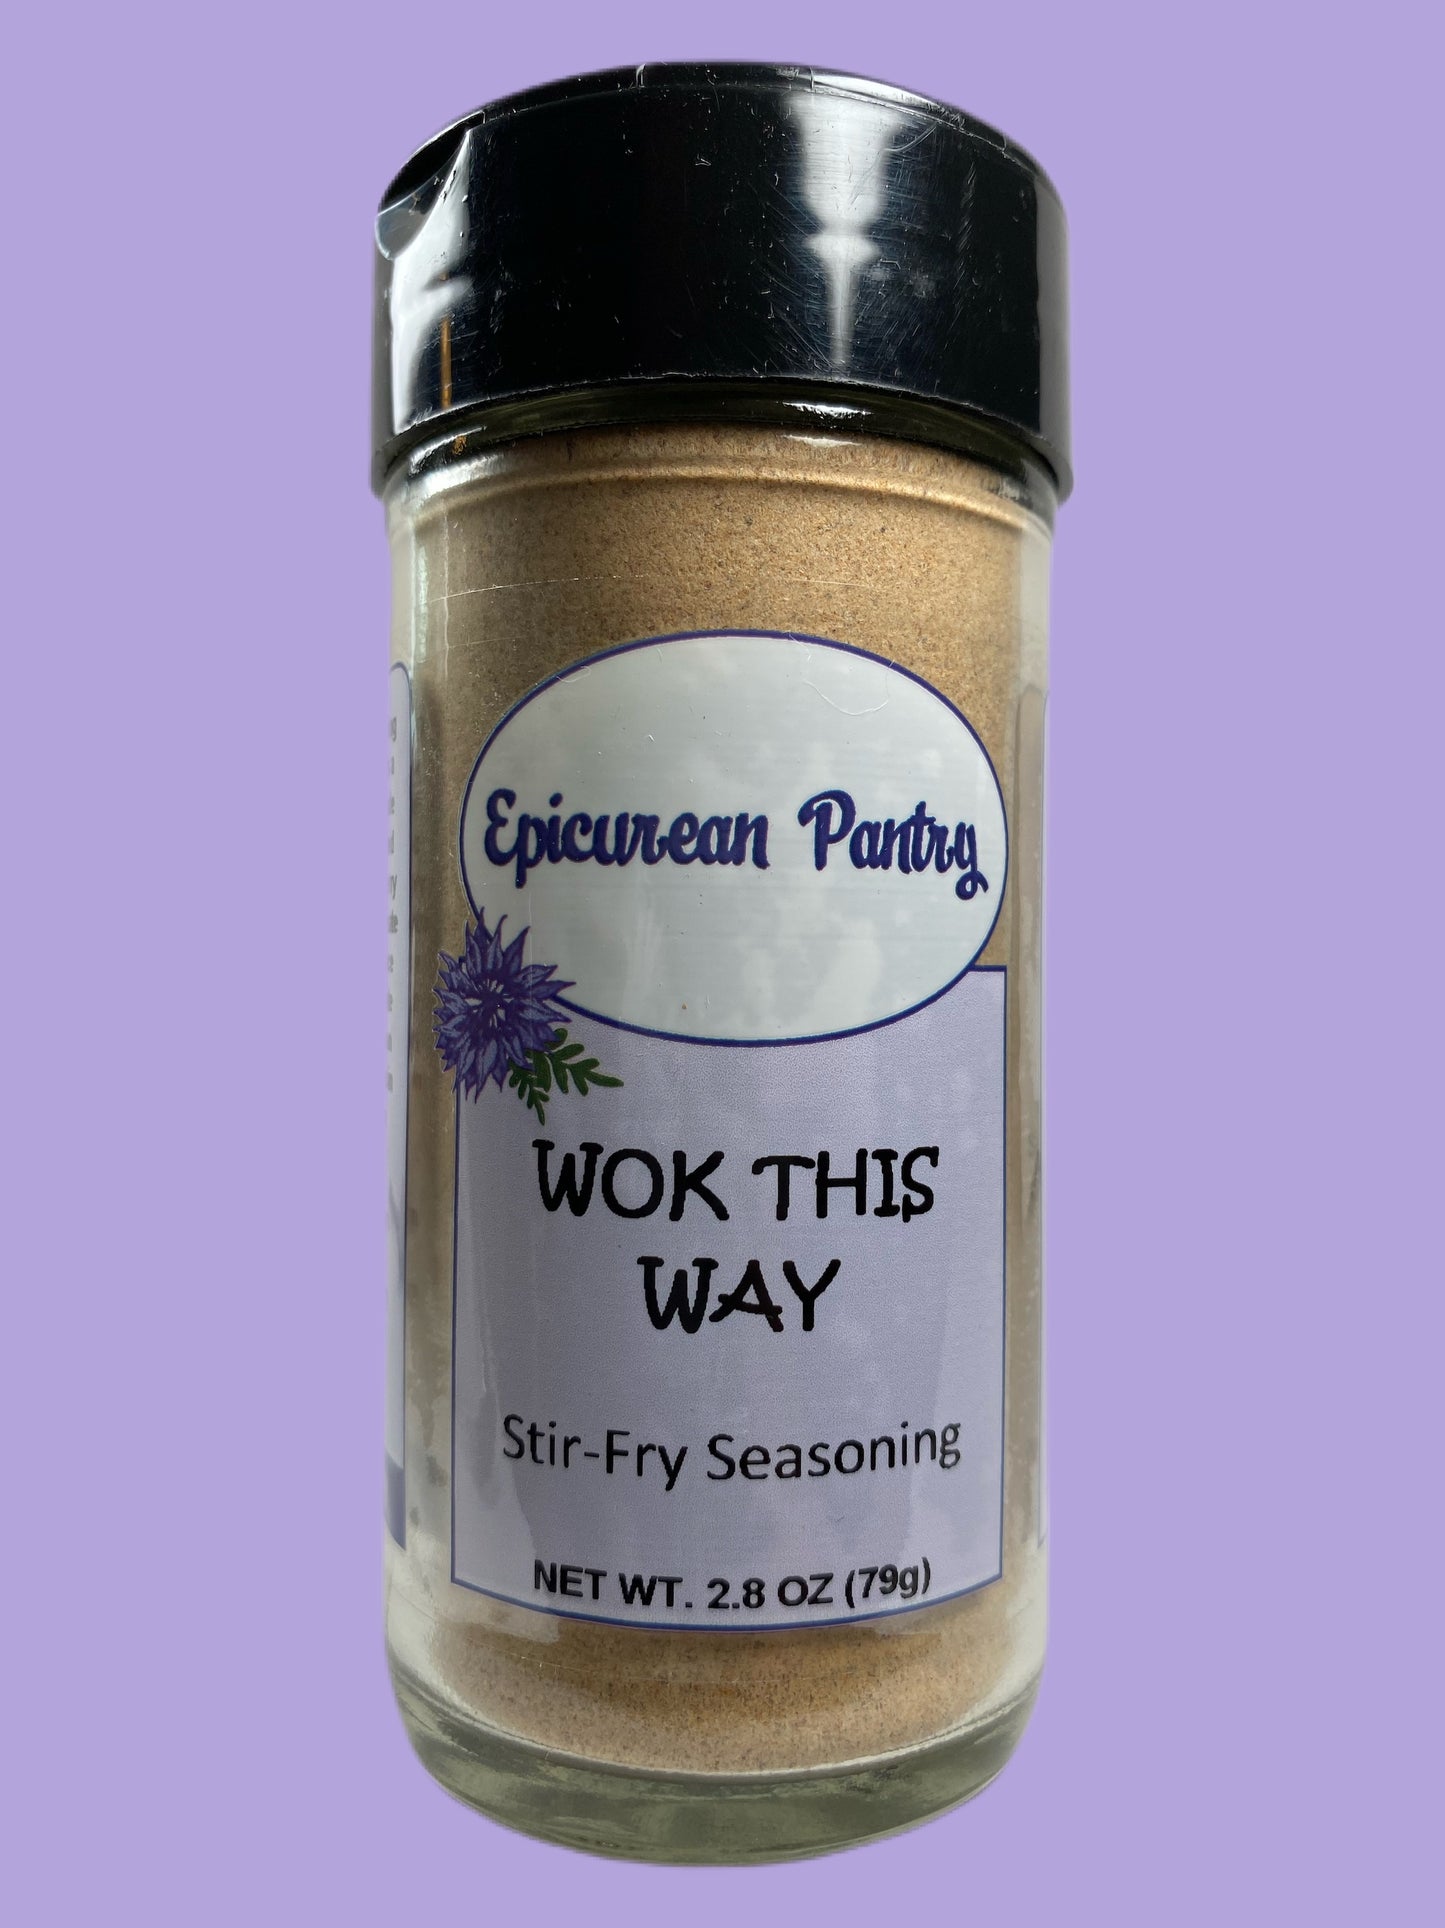 Wok This Way - Stir-Fry Seasoning - 2.8 oz net wt